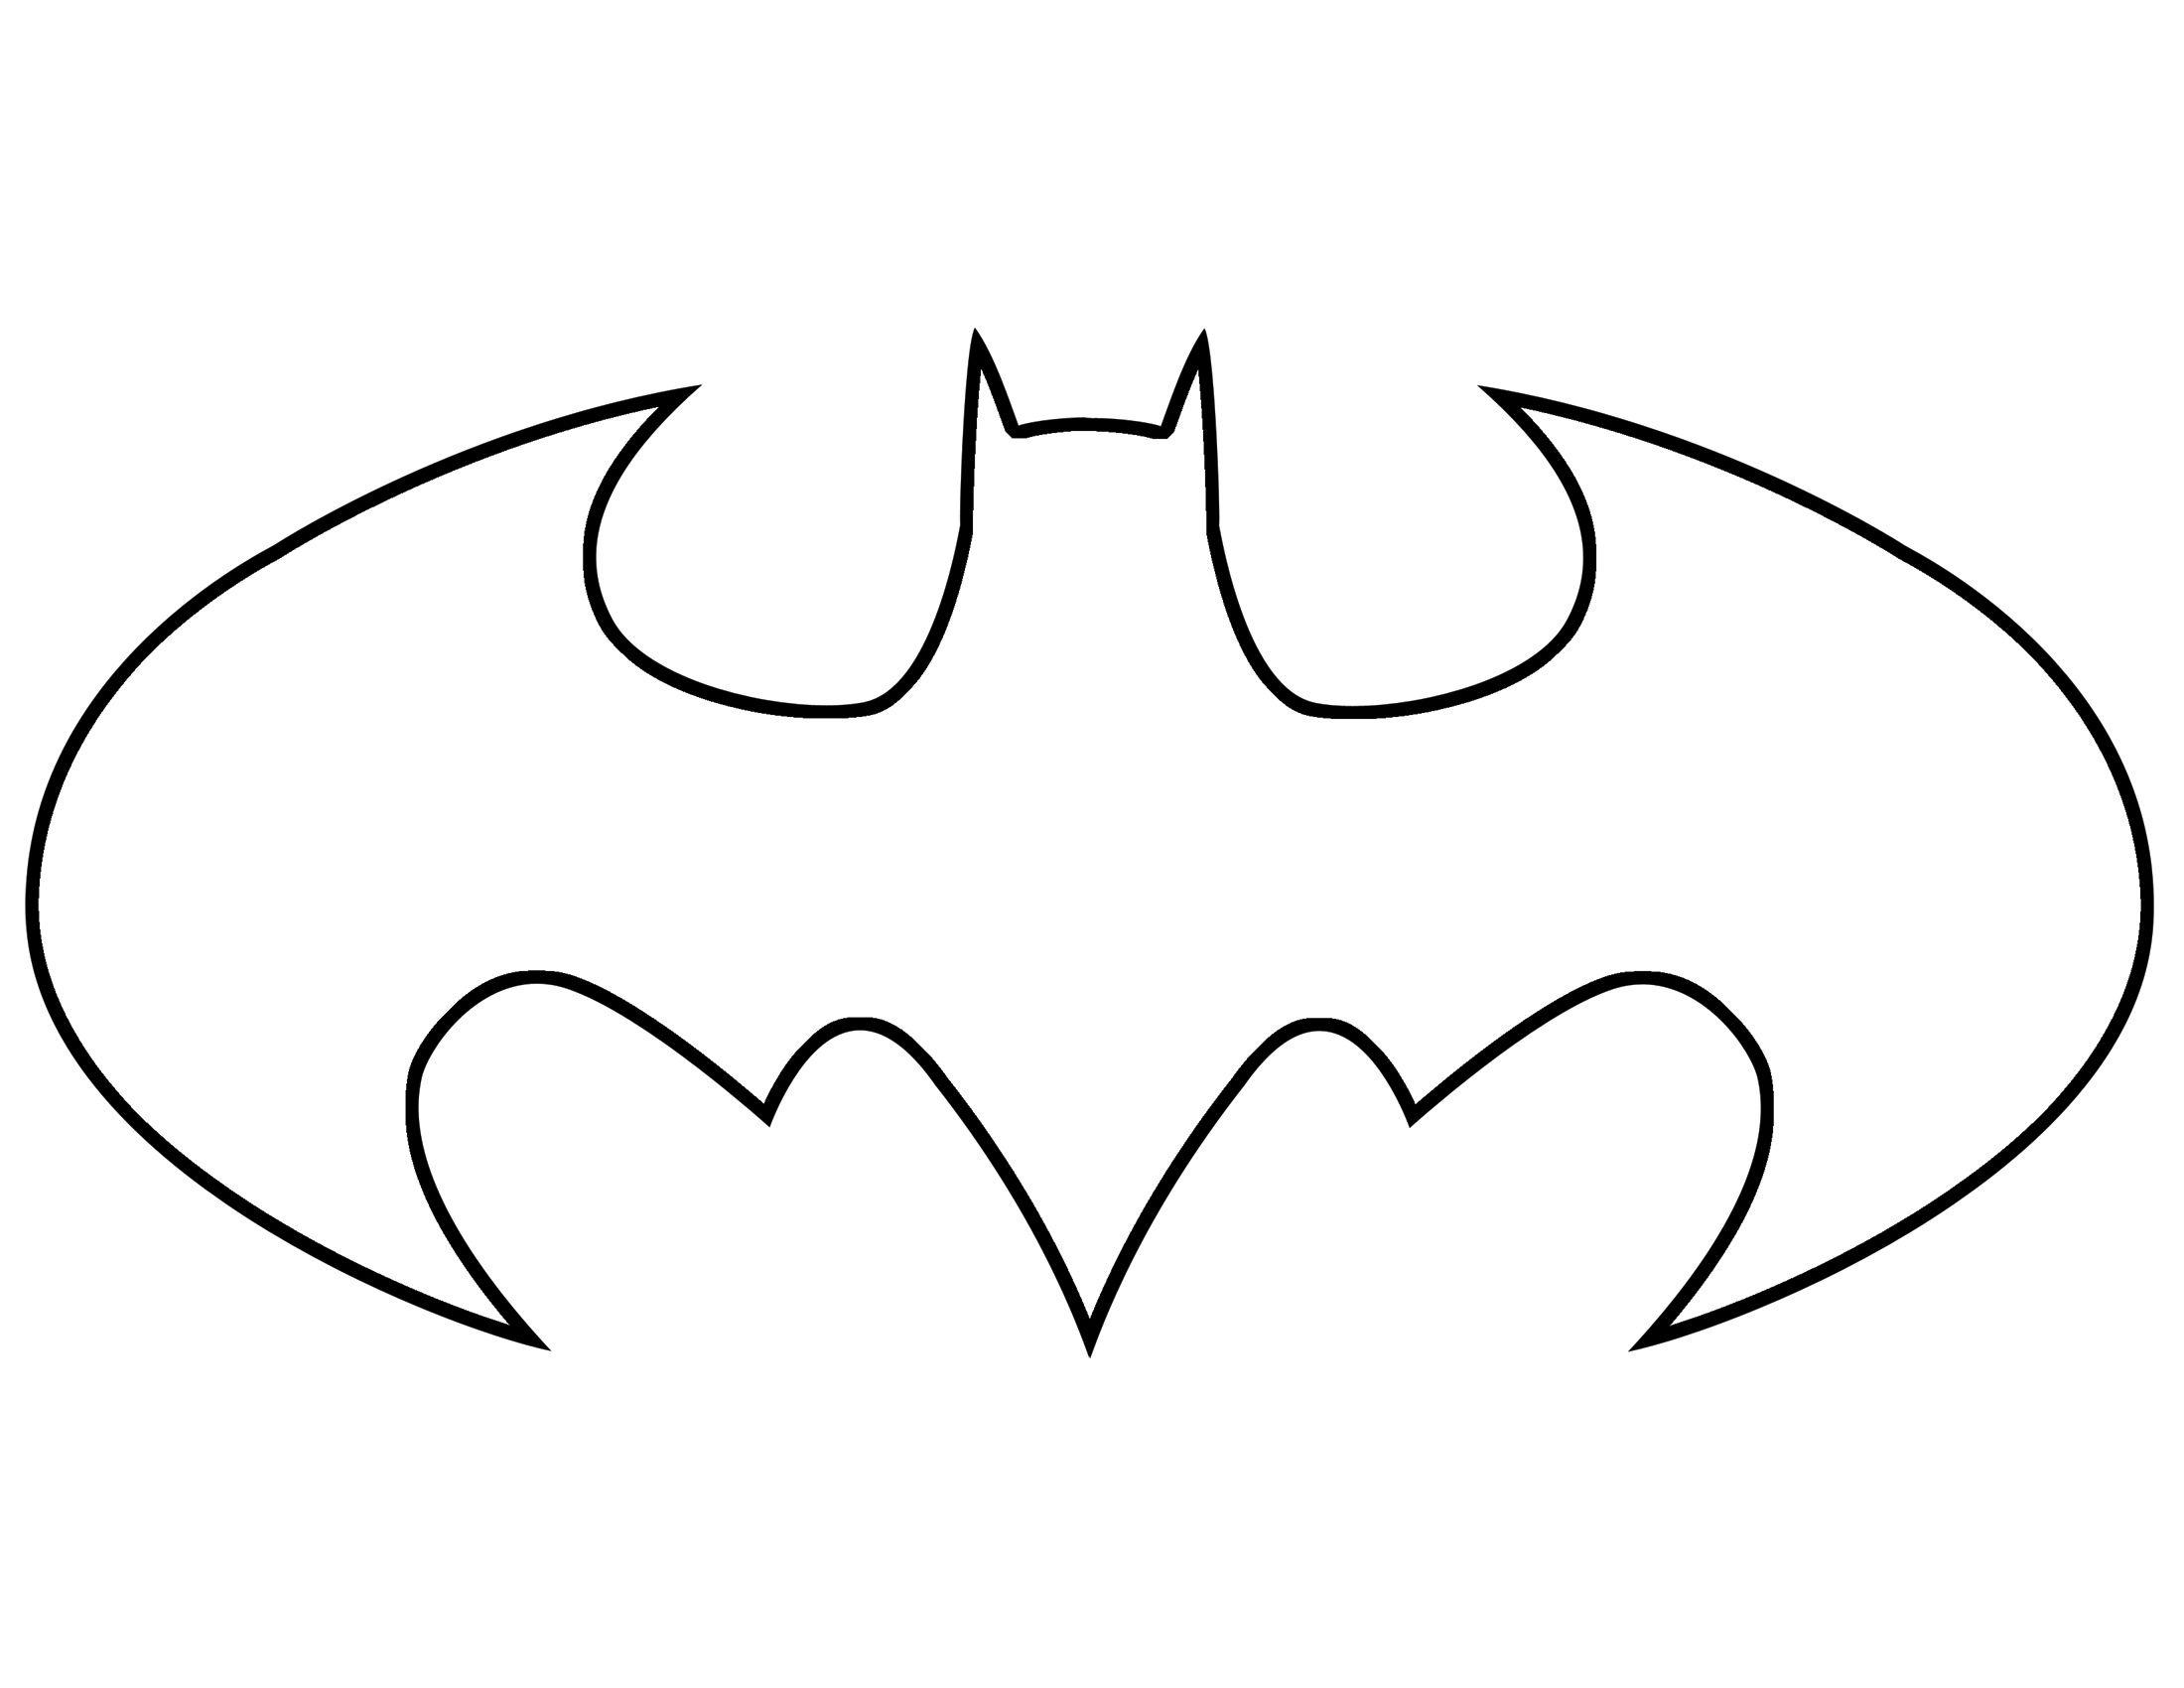 Cool Black and White Outline Logo - Free Superman Symbol Outline, Download Free Clip Art, Free Clip Art ...